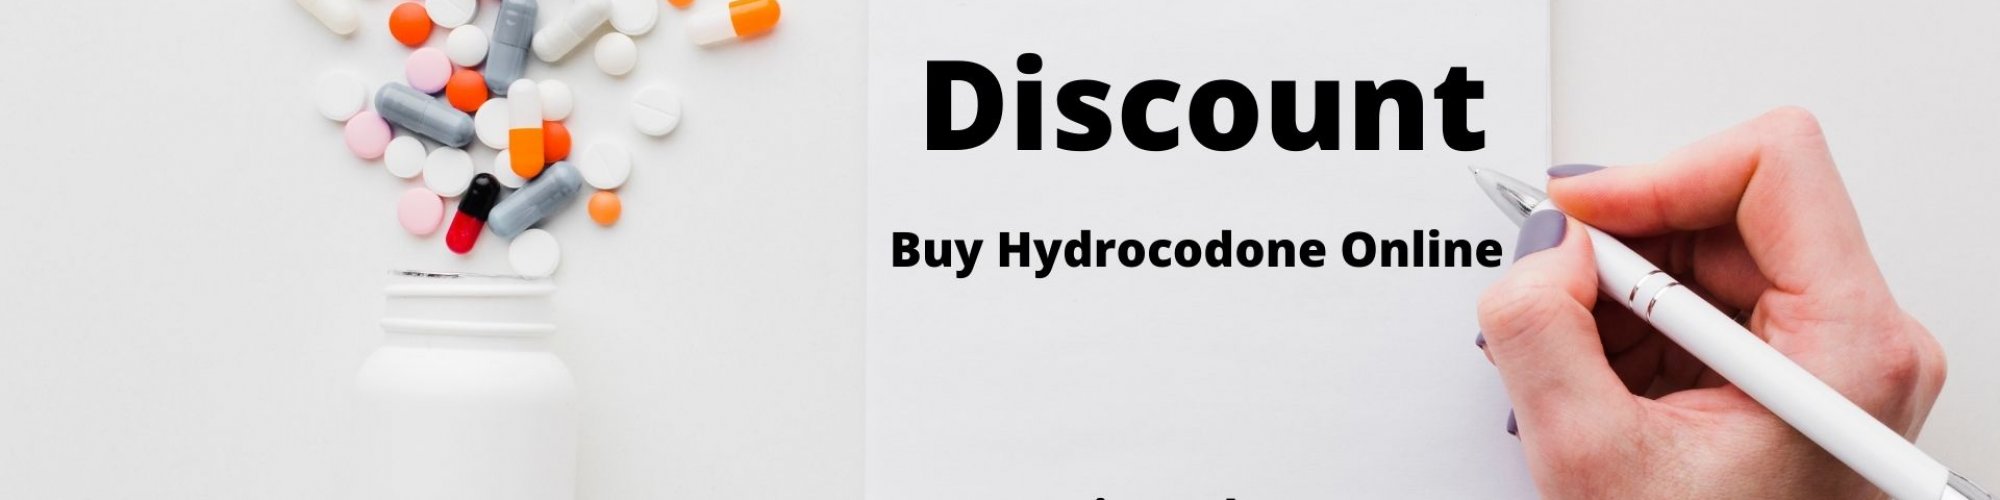 Buy hydrocodone online from painmedsstore.com